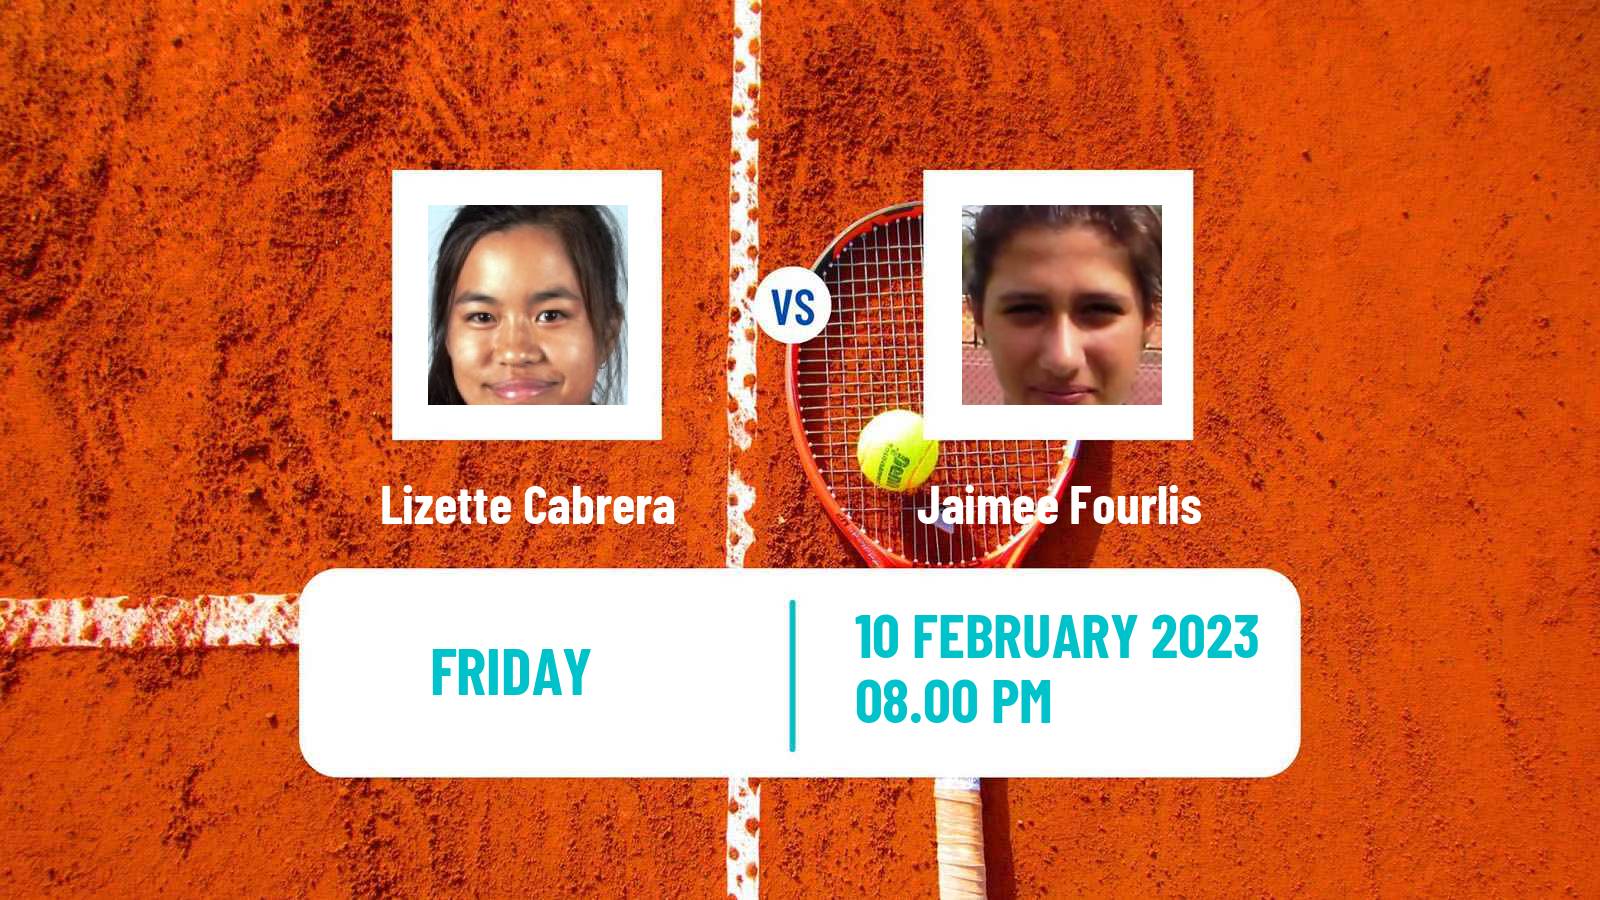 Tennis ITF Tournaments Lizette Cabrera - Jaimee Fourlis